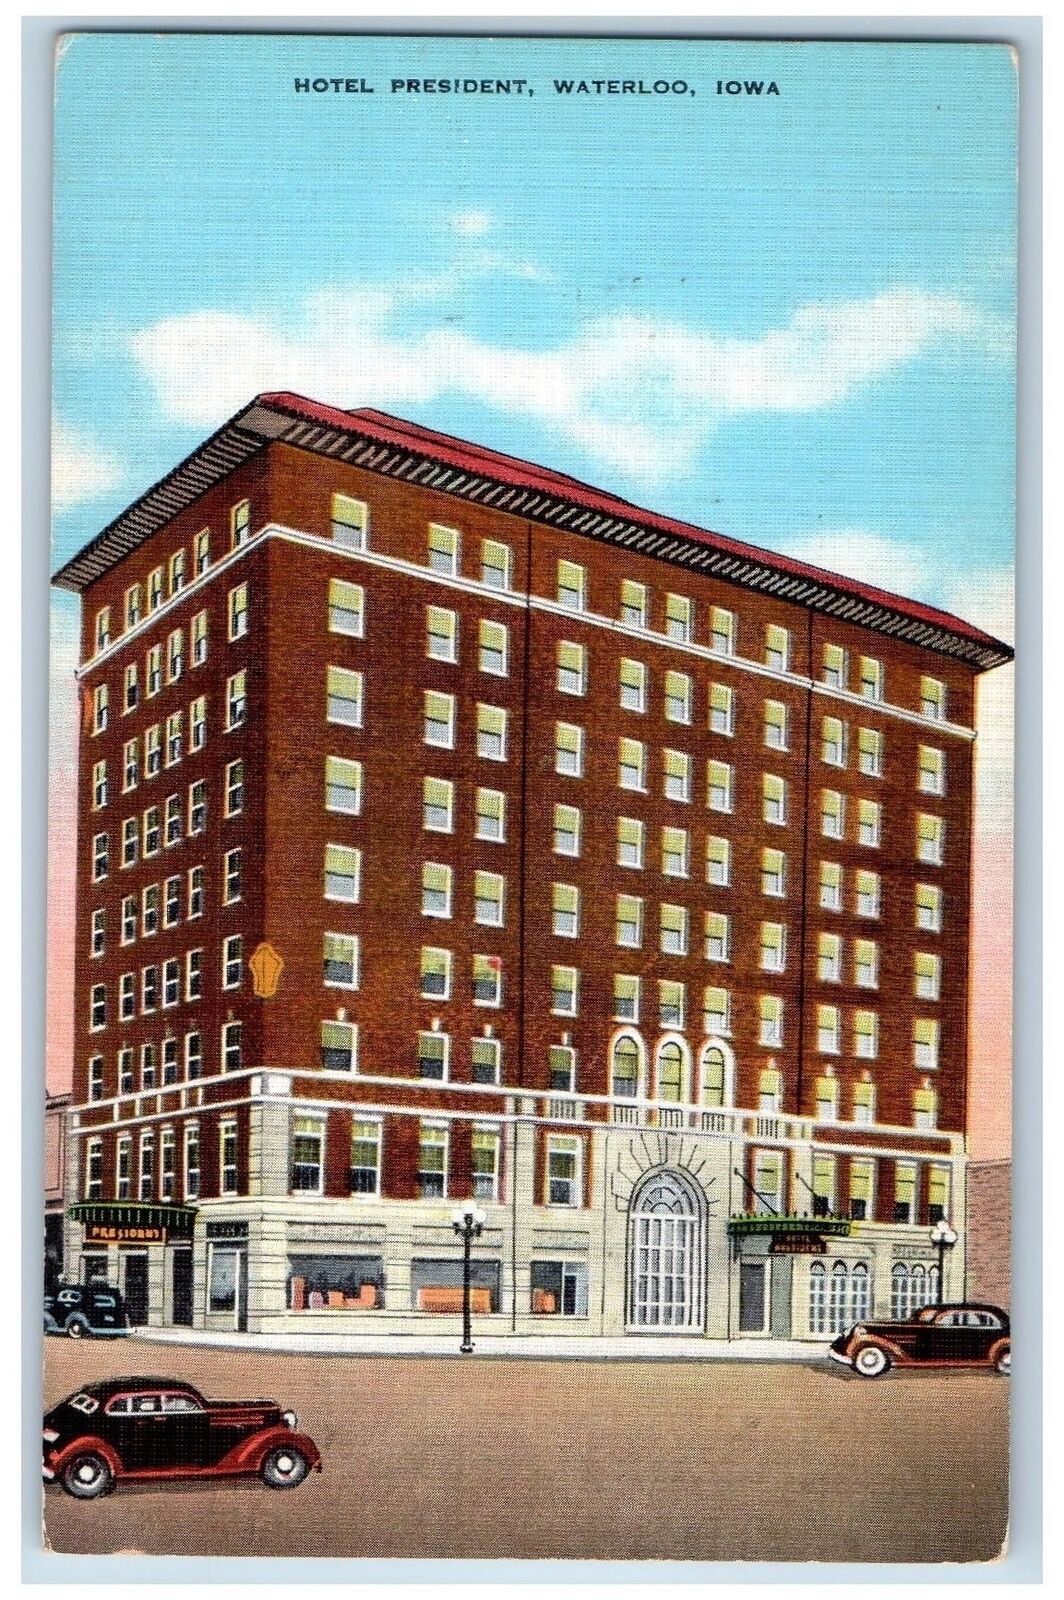 c1940's Hotel President & Restaurant Building Classic Car Waterloo Iowa Postcard